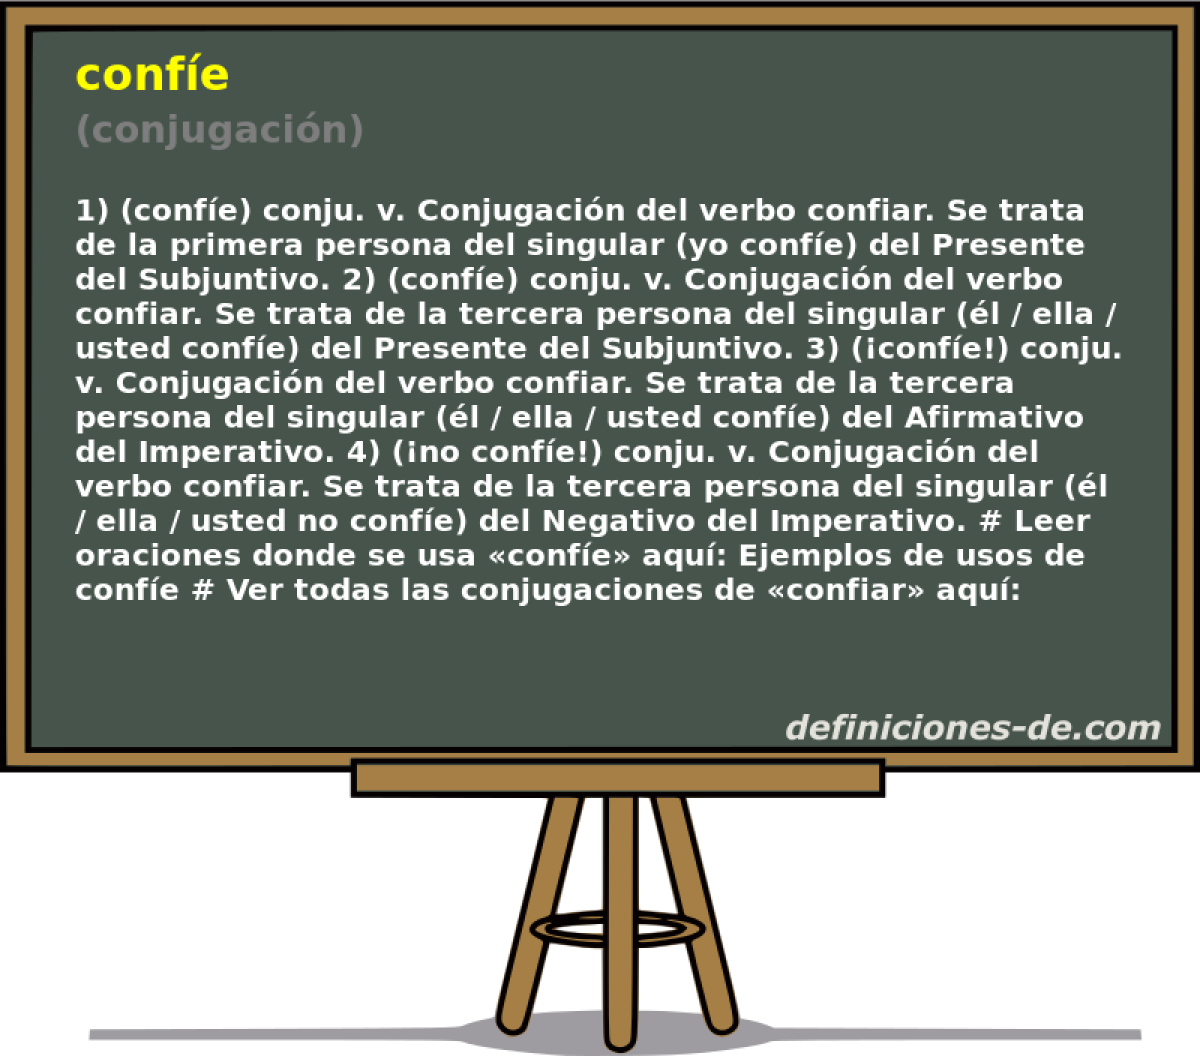 confe (conjugacin)